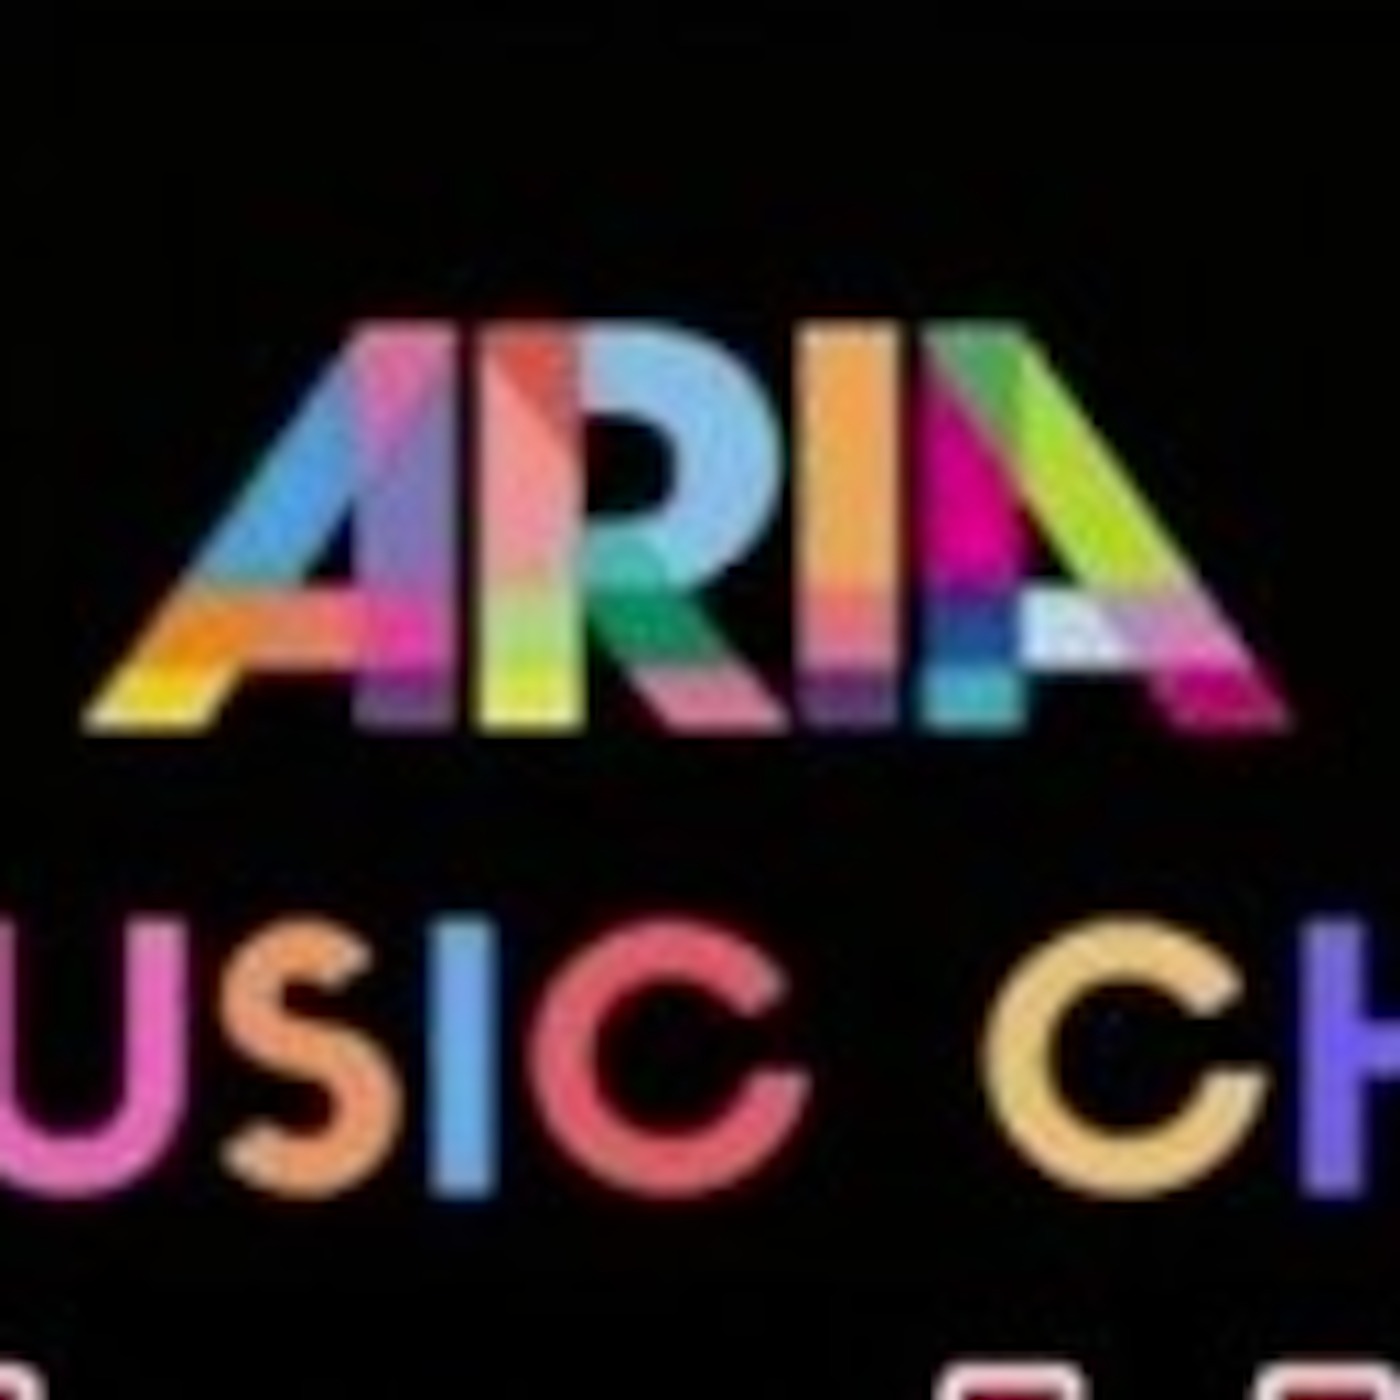 The Aria Music Chart Show